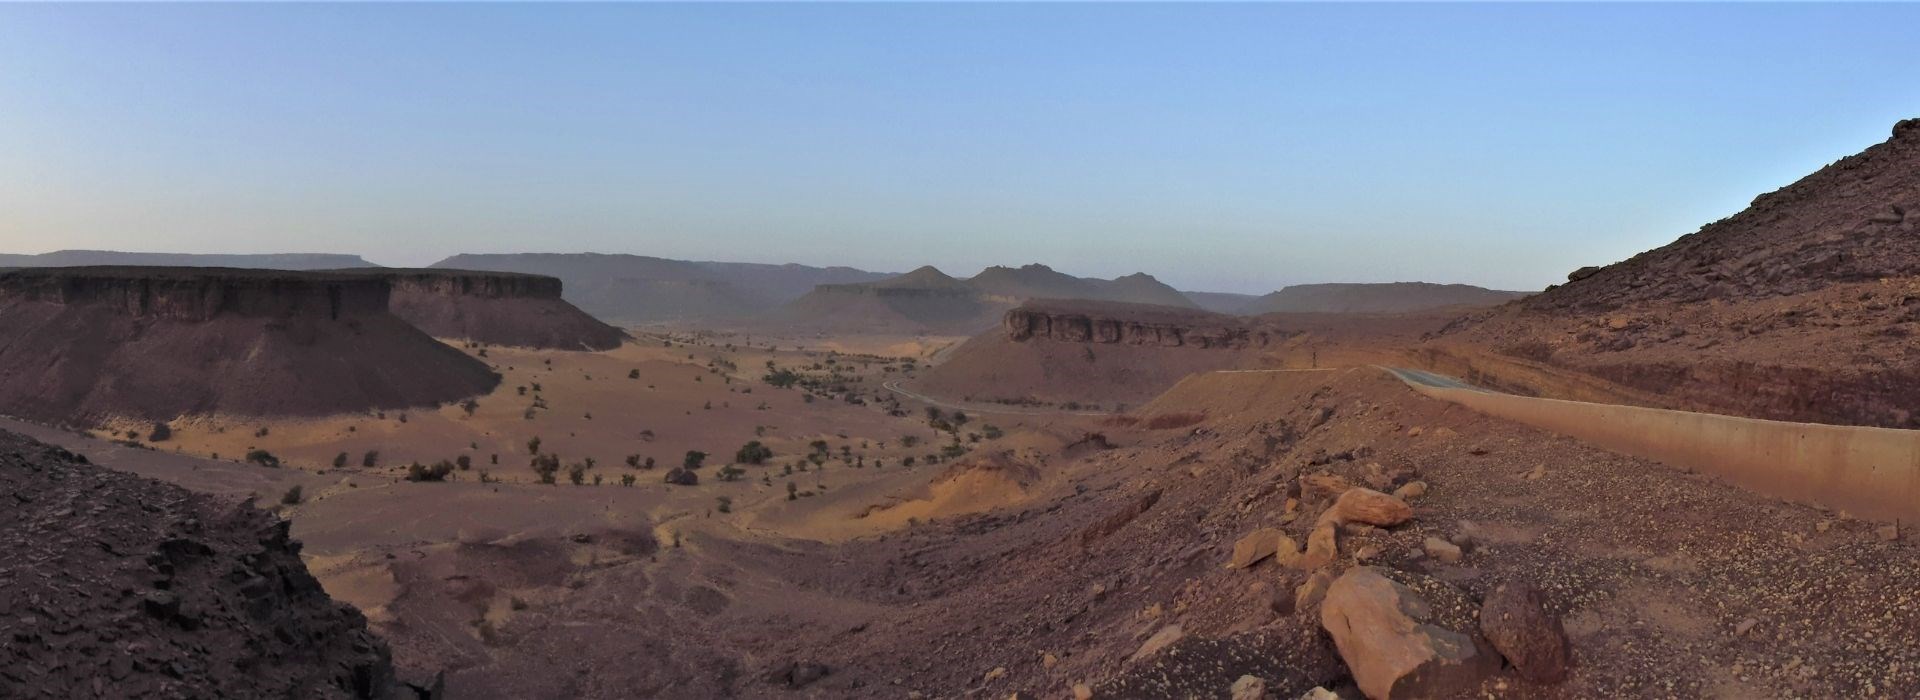 Visiter La Vallée blanche - Mauritanie